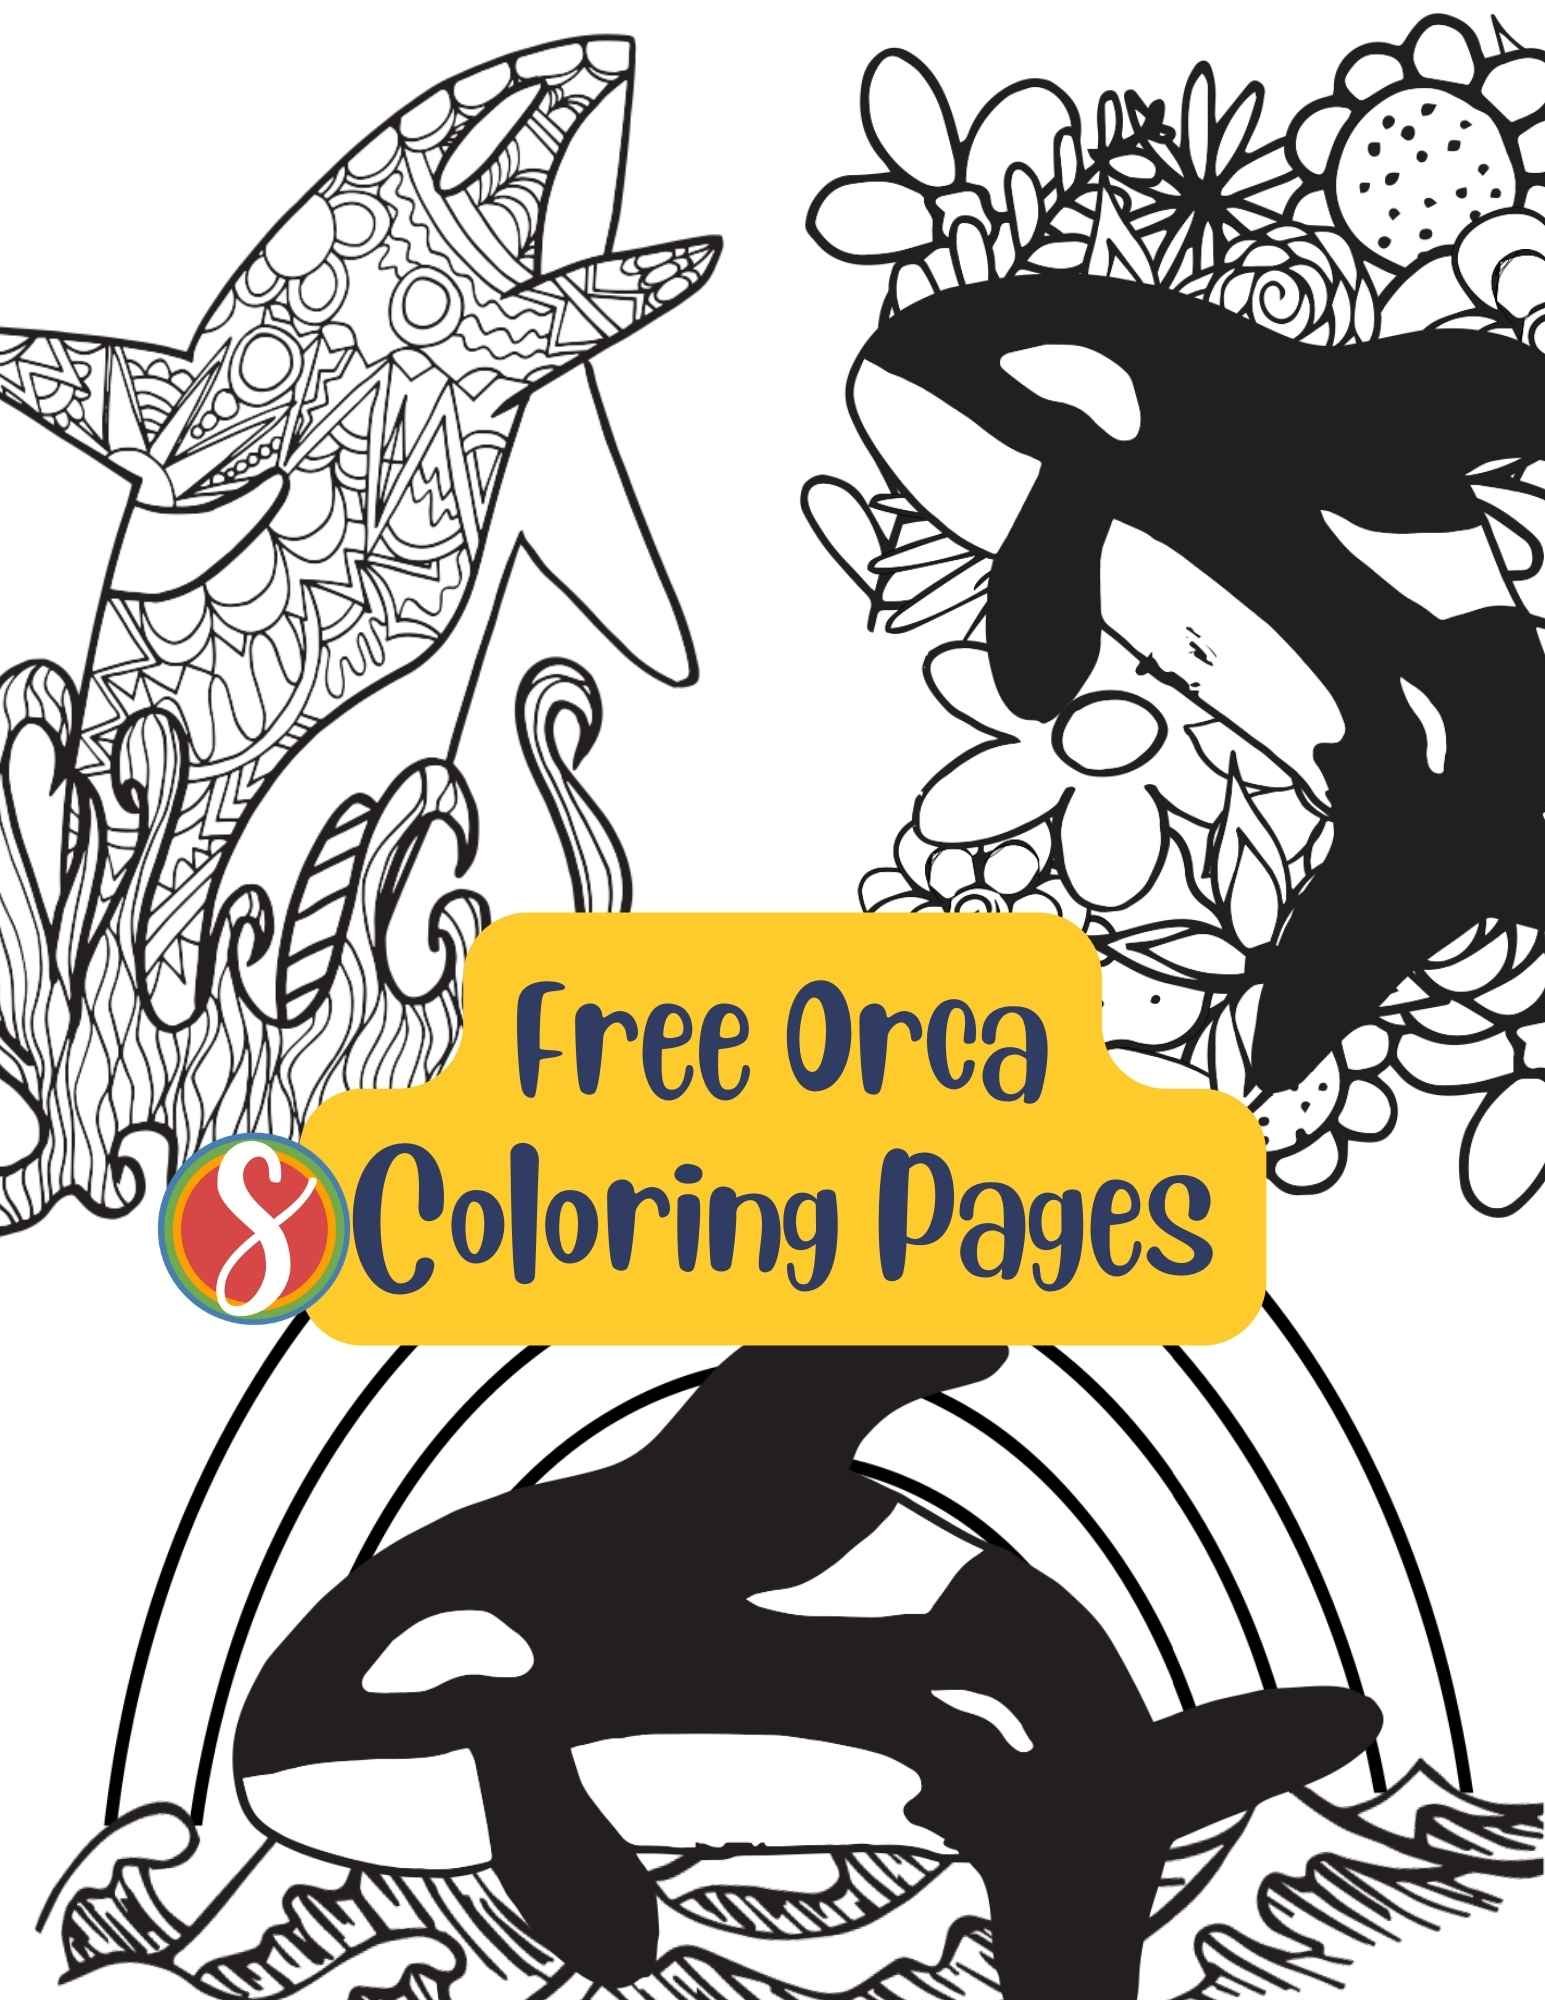 Free orca coloring pages â stevie doodles